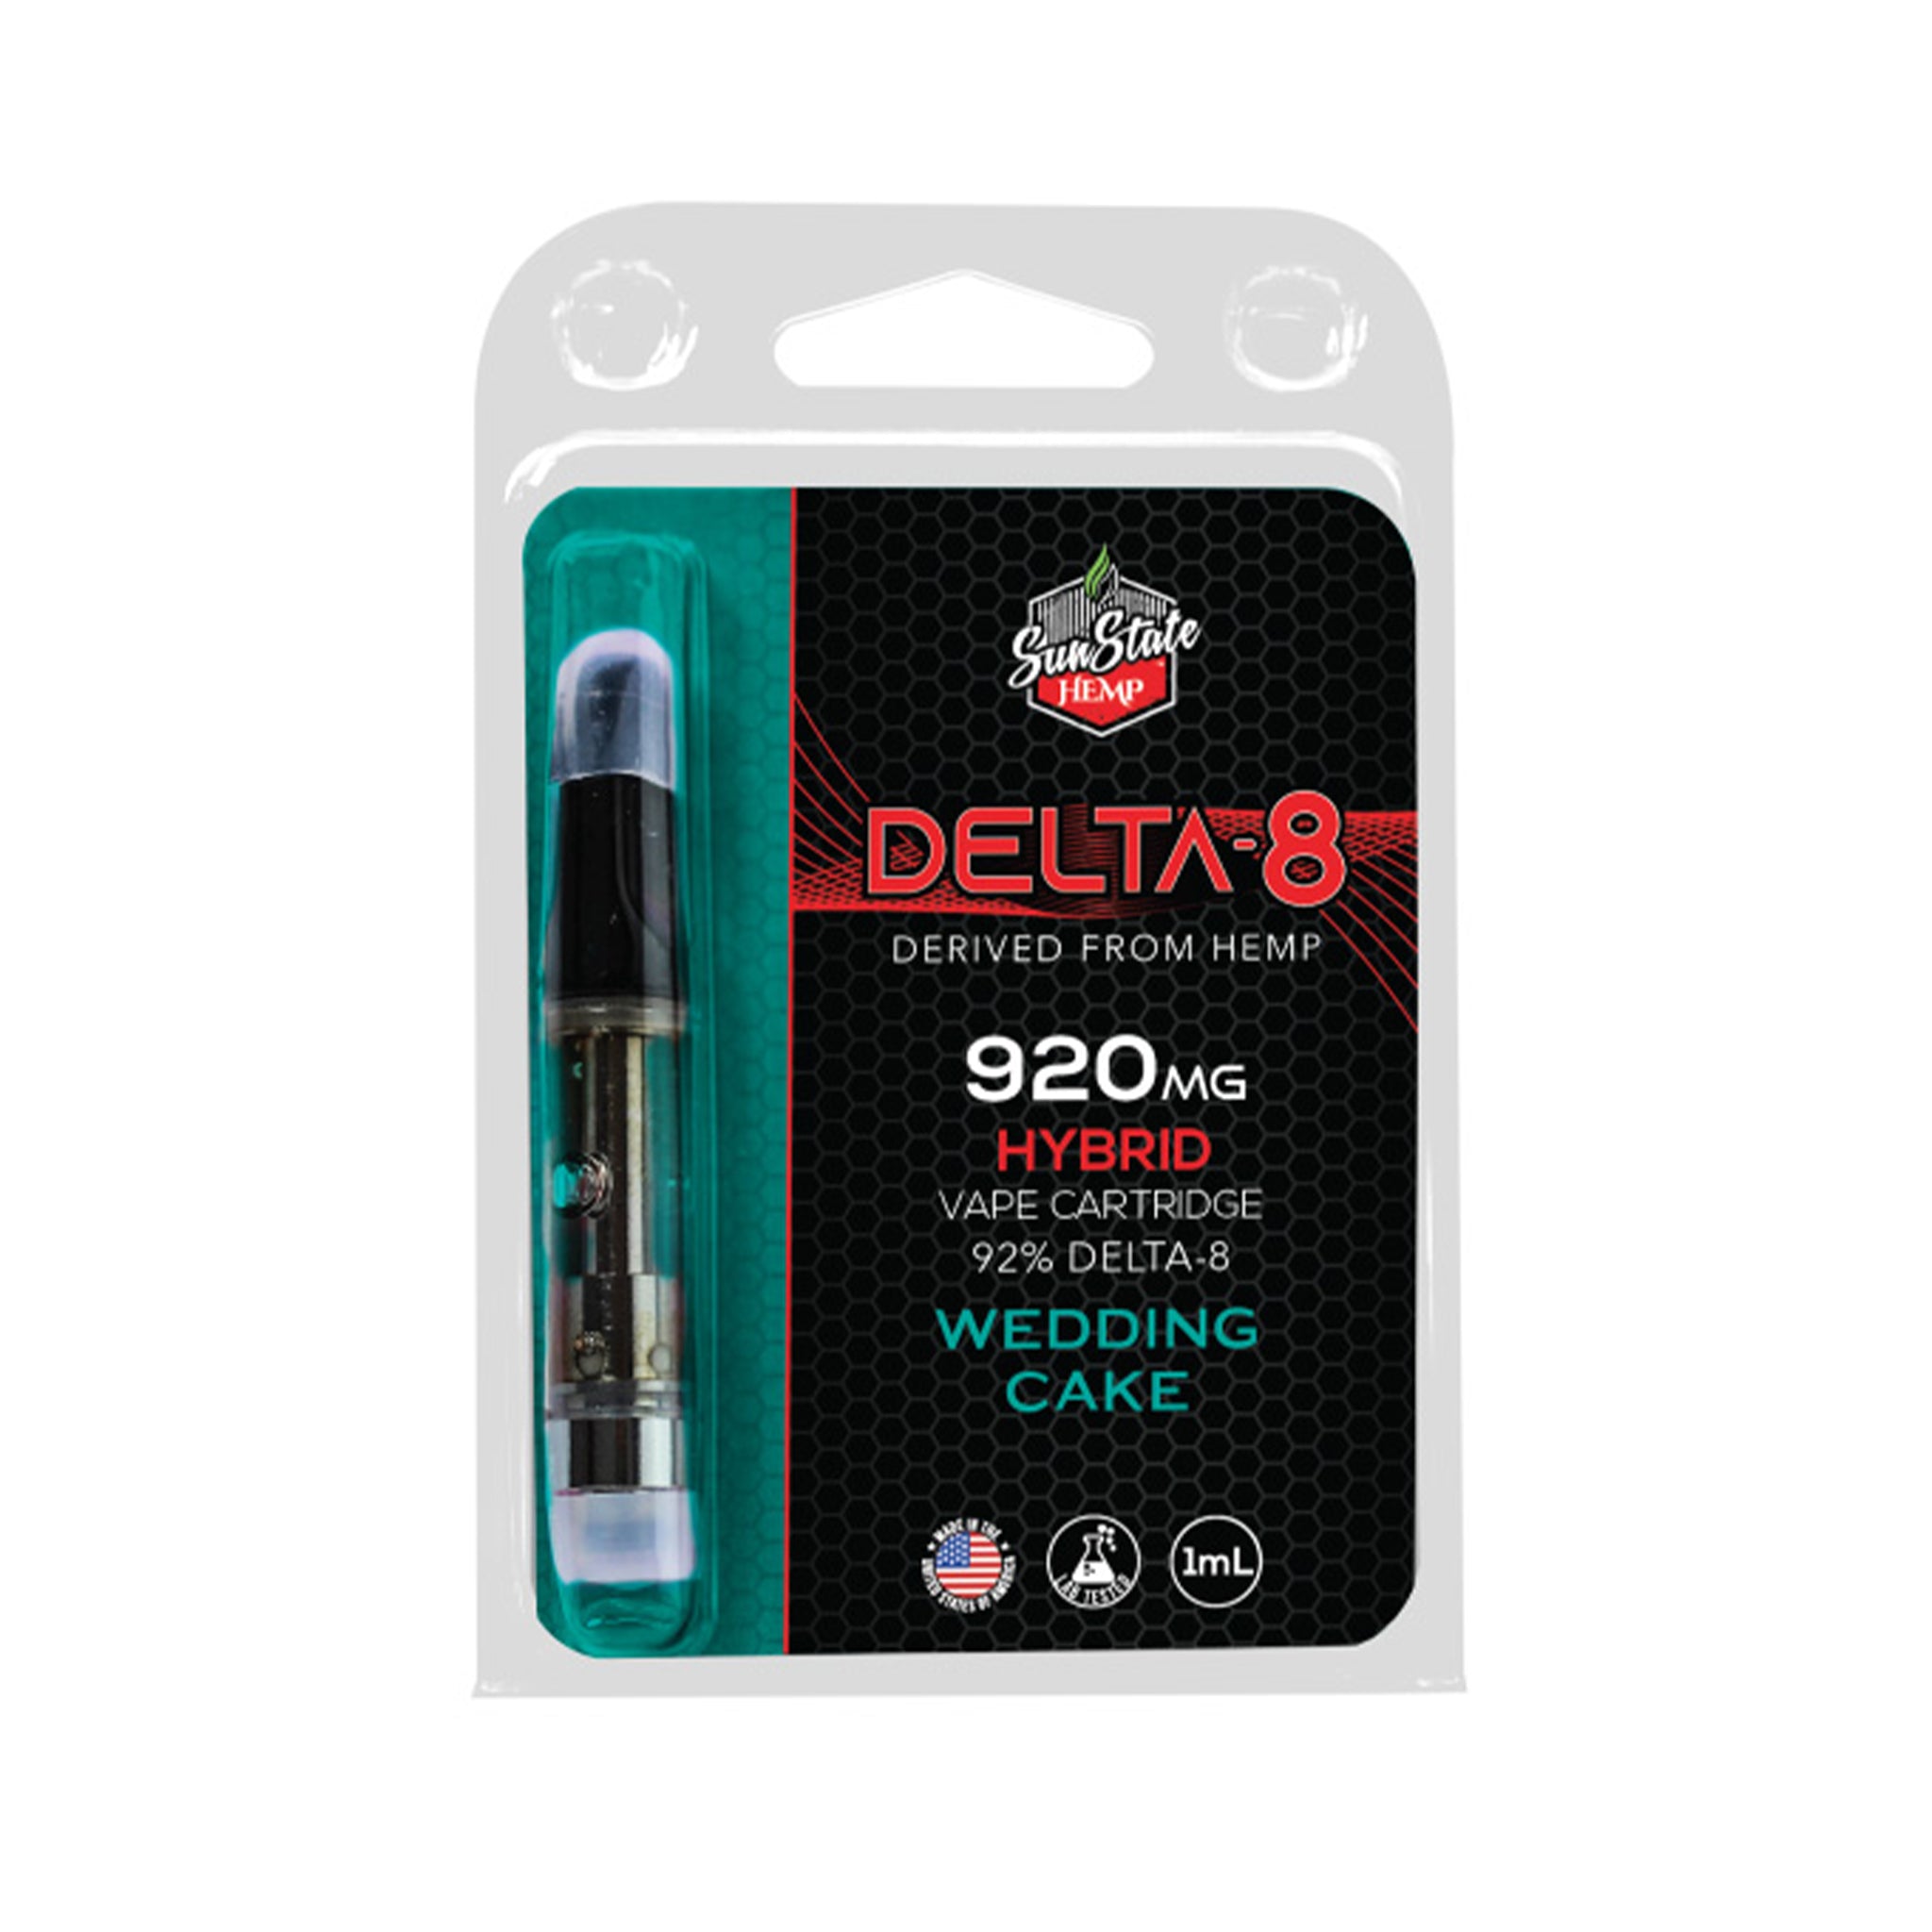 Delta-8 Derived From Hemp Hybrid Vape Cartridge | Wedding Cake | 920mg